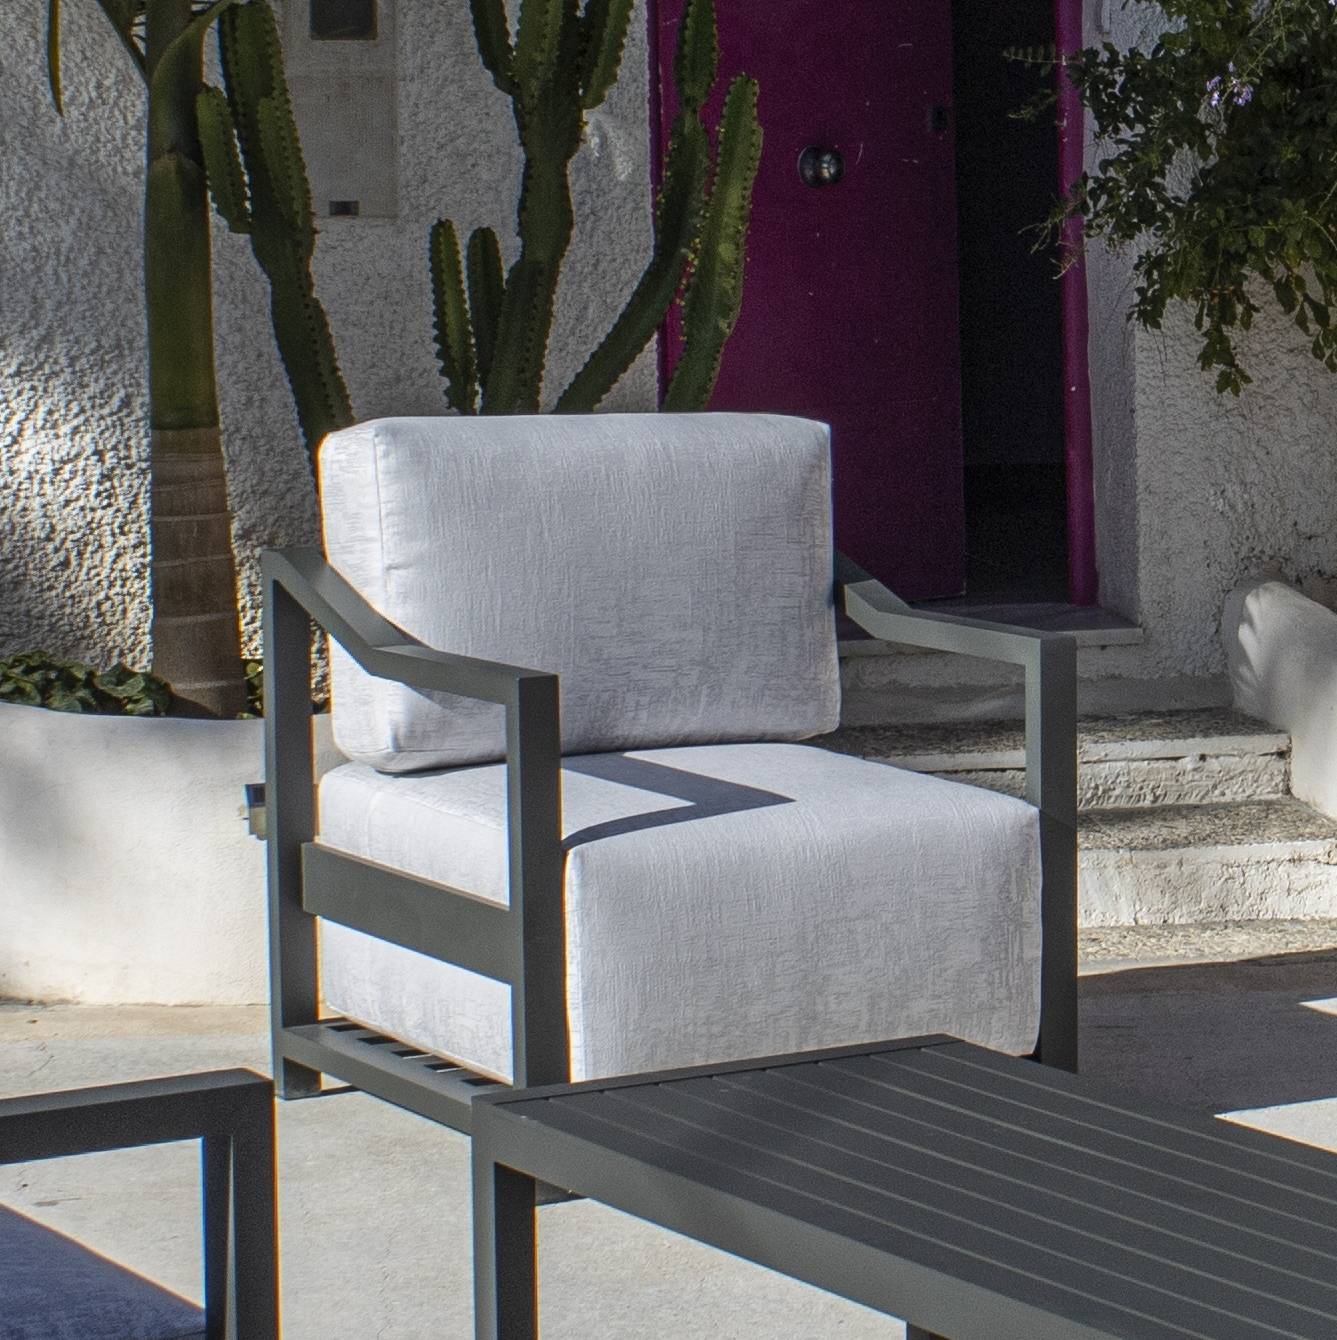 Set Aluminio Arouva-8 - Conjunto aluminio con cojines extra extra confort: sofá de 3 plazas + 2 sillones + 1 mesa de centro. Colores: blanco, antracita, marrón, champagne o plata.